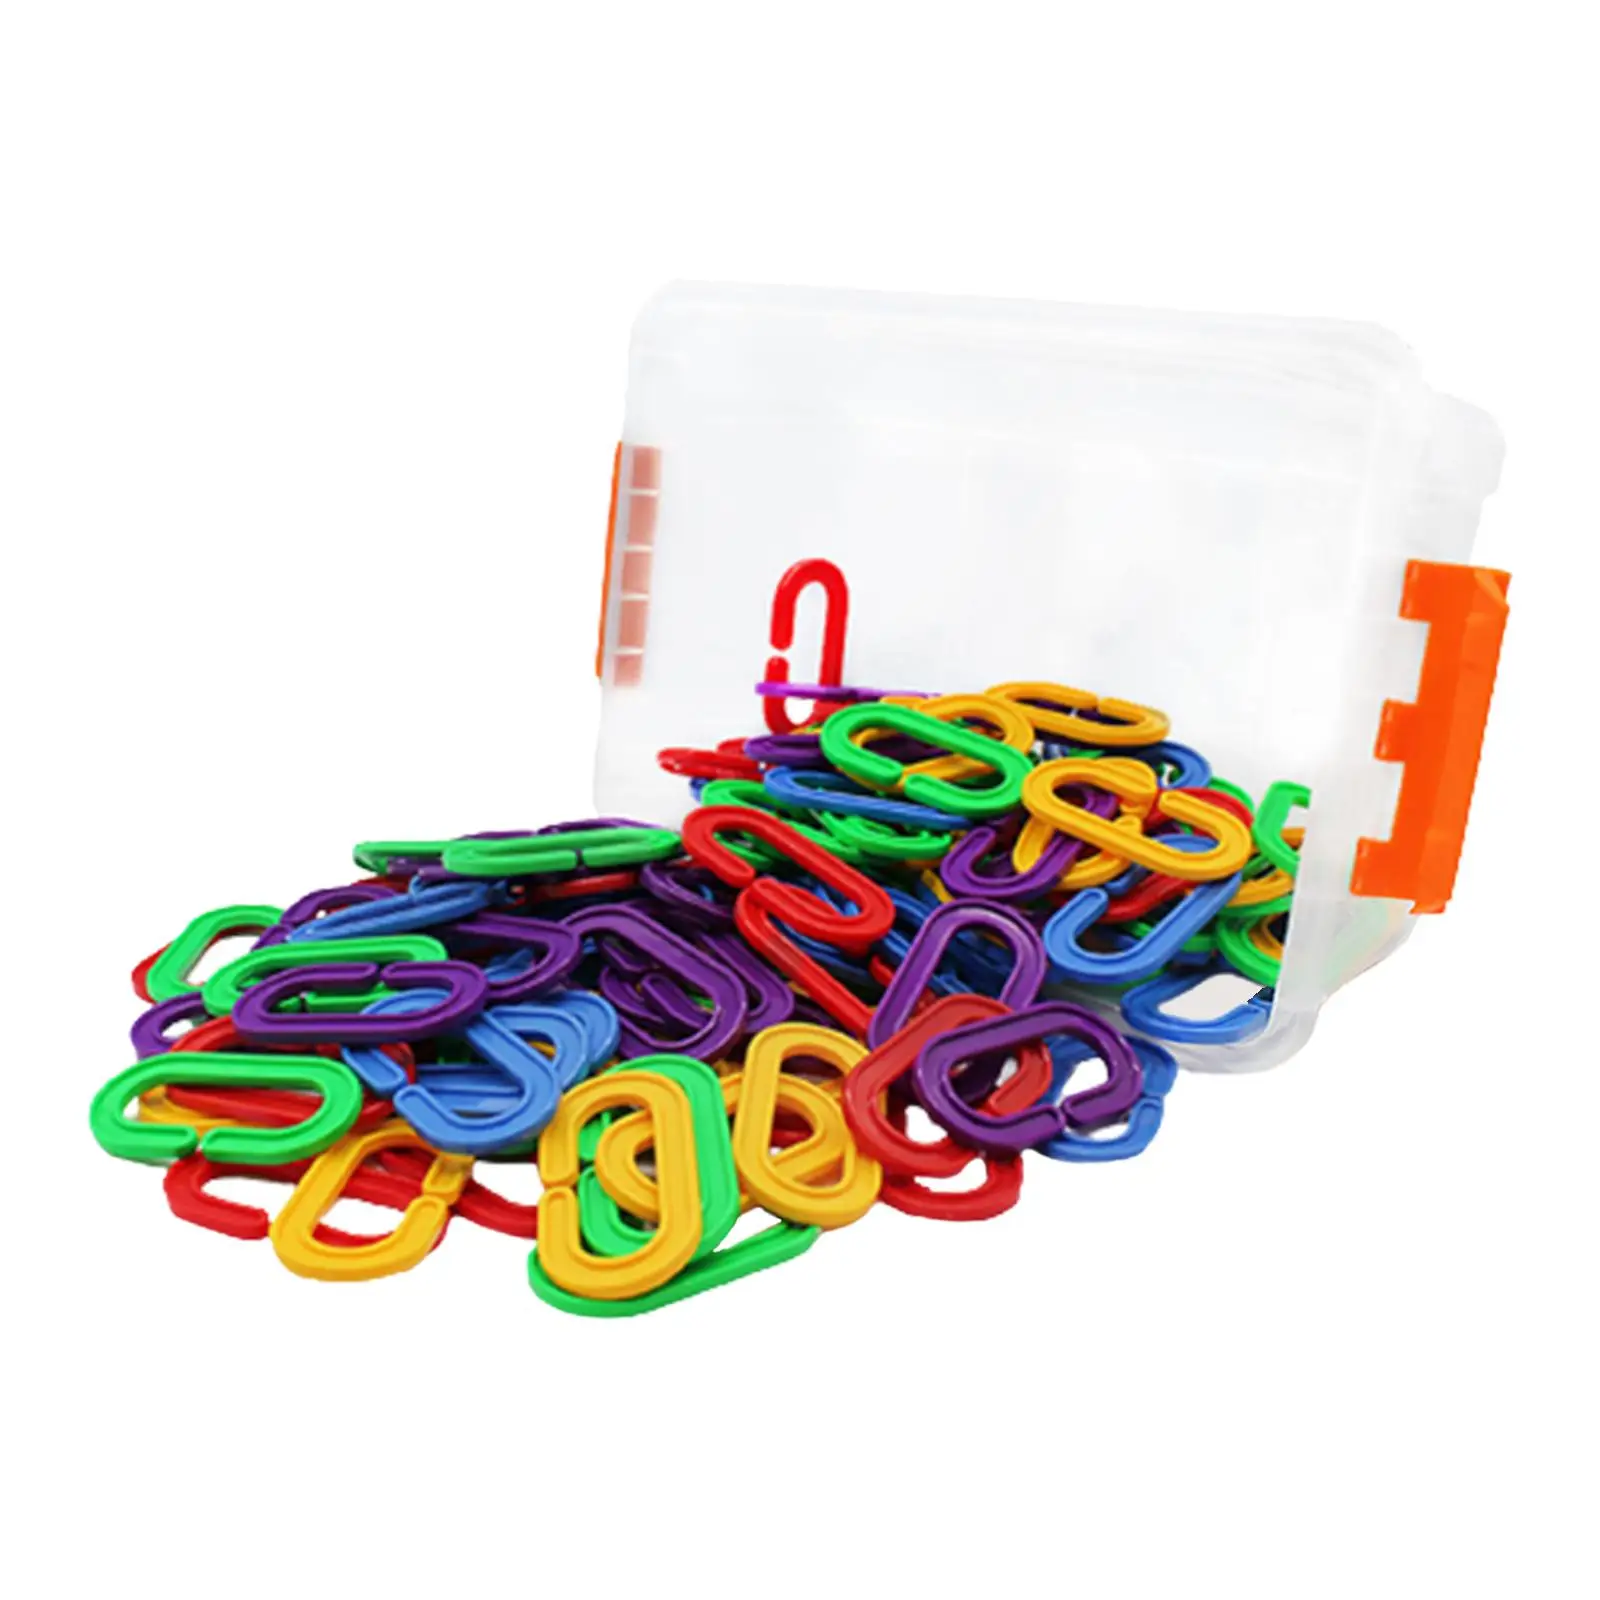 150x C Hook, Colorful Links, Chain Links DIY Toys, Rainbow C Links for Playroom